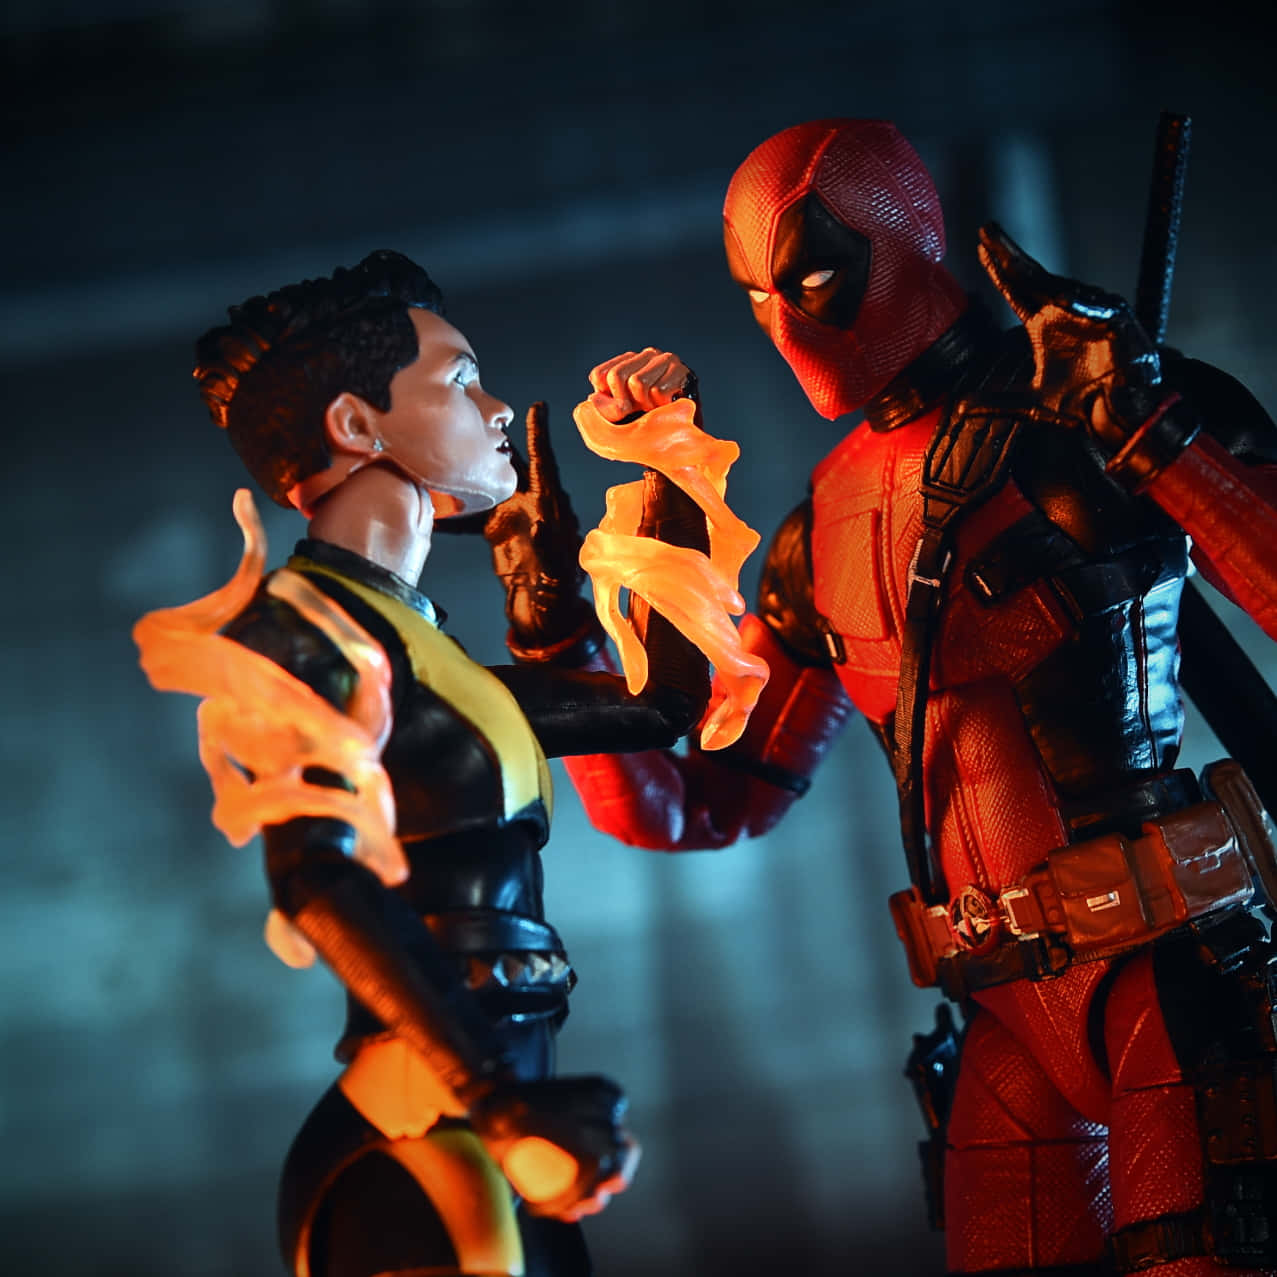 Deadpool and Negasonic Teenage Warhead in action Wallpaper